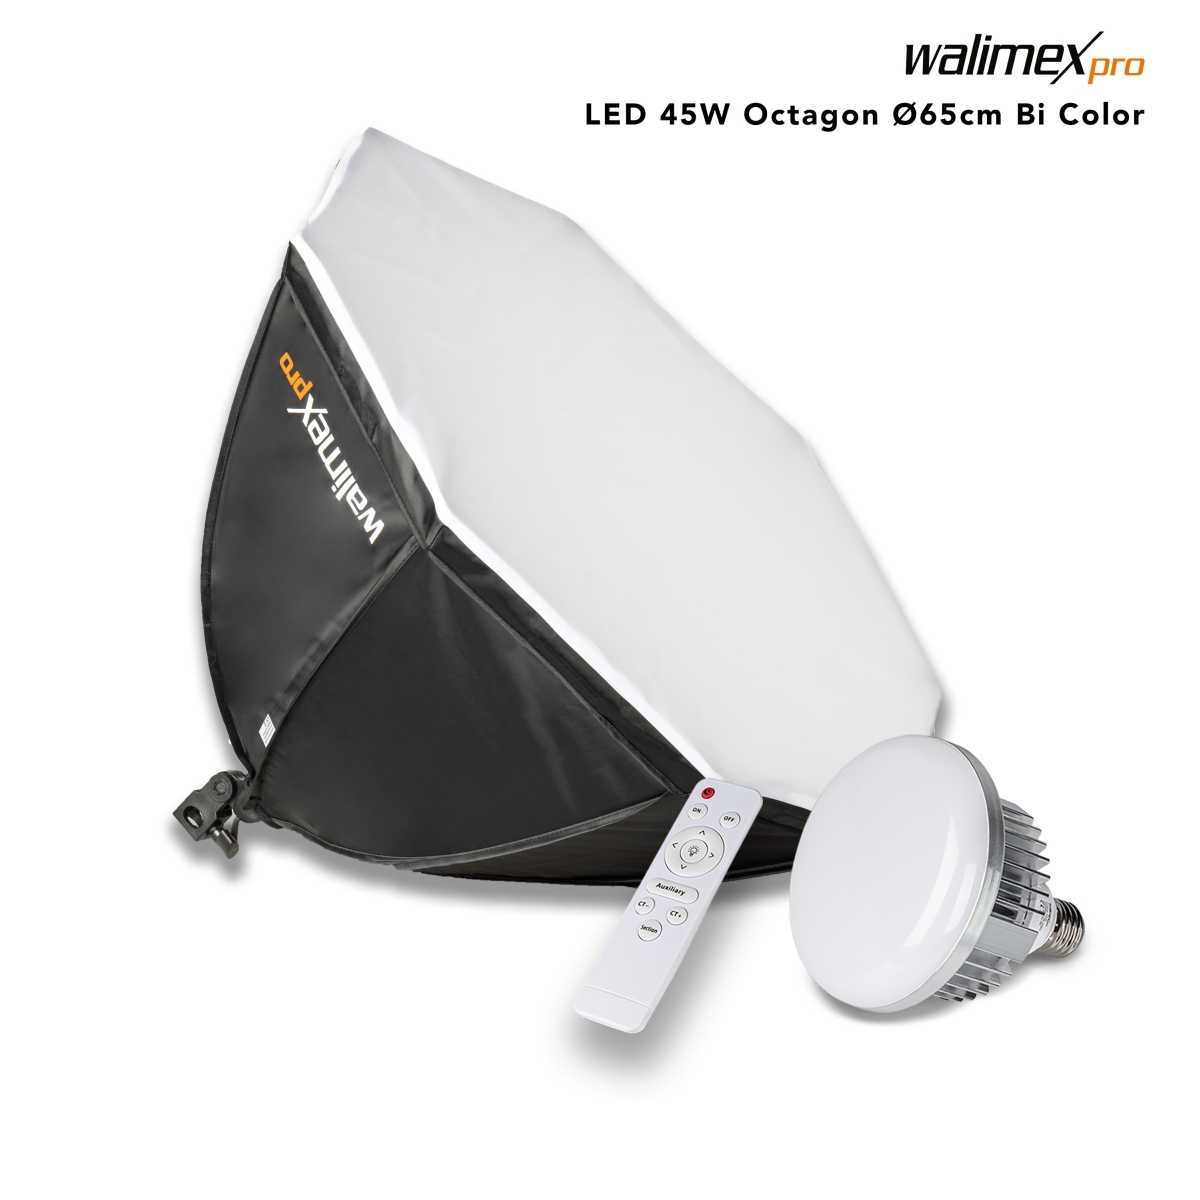 Walimex pro LED 45W Octagon Ø65cm Bi Color